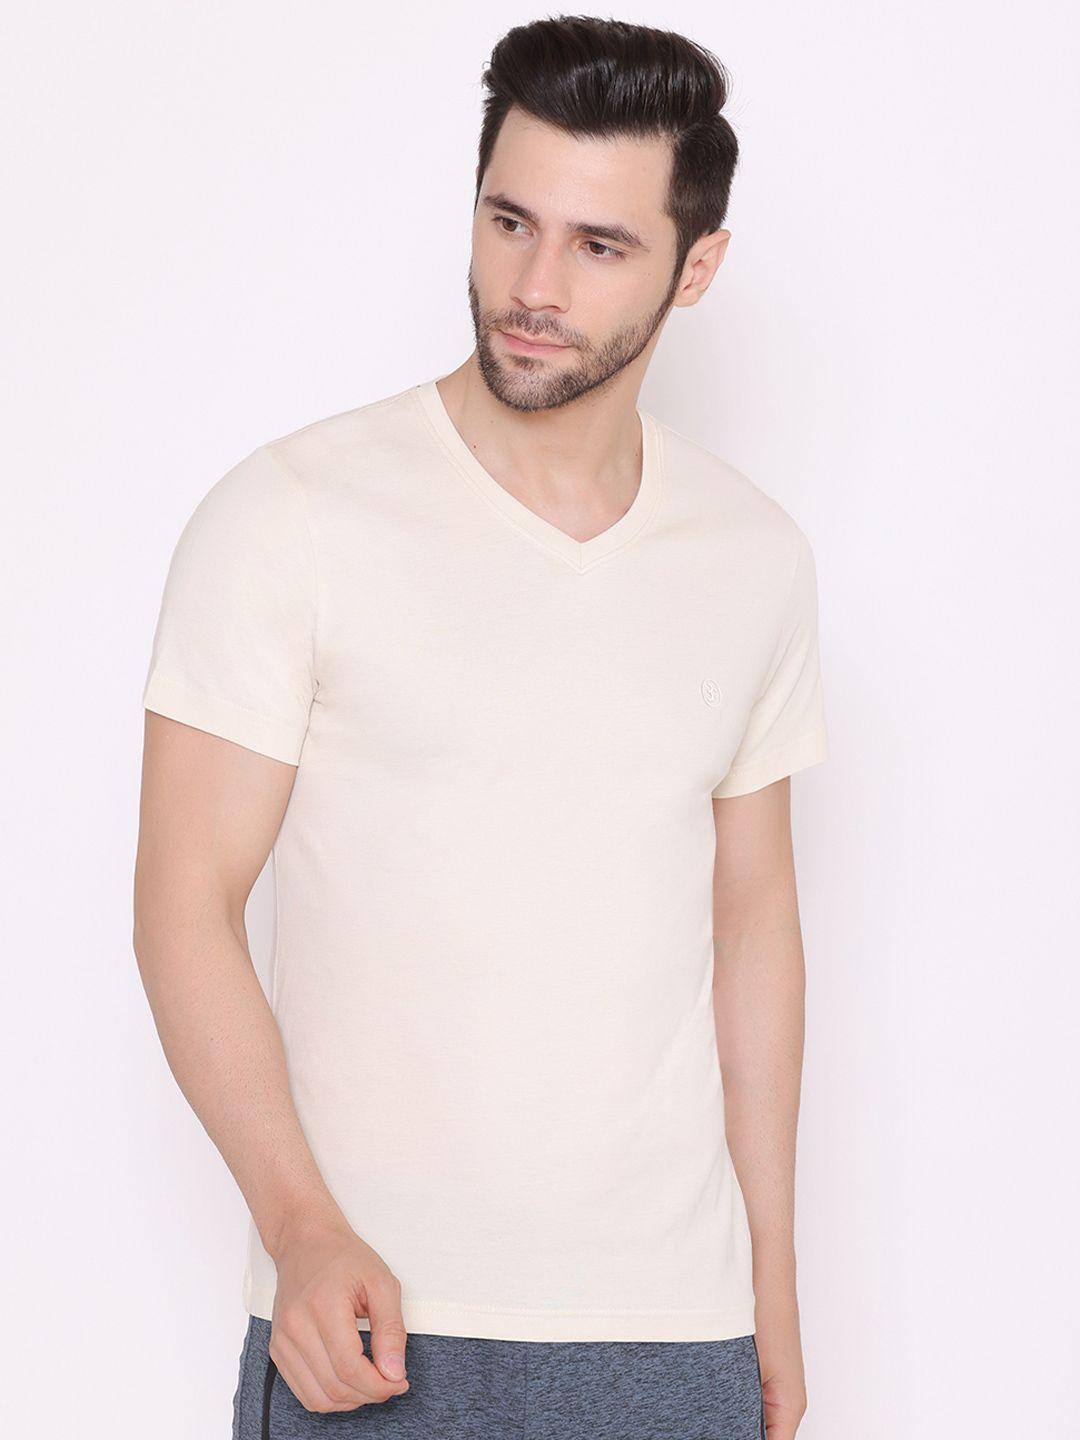 bodyactive men beige v-neck cotton t-shirt